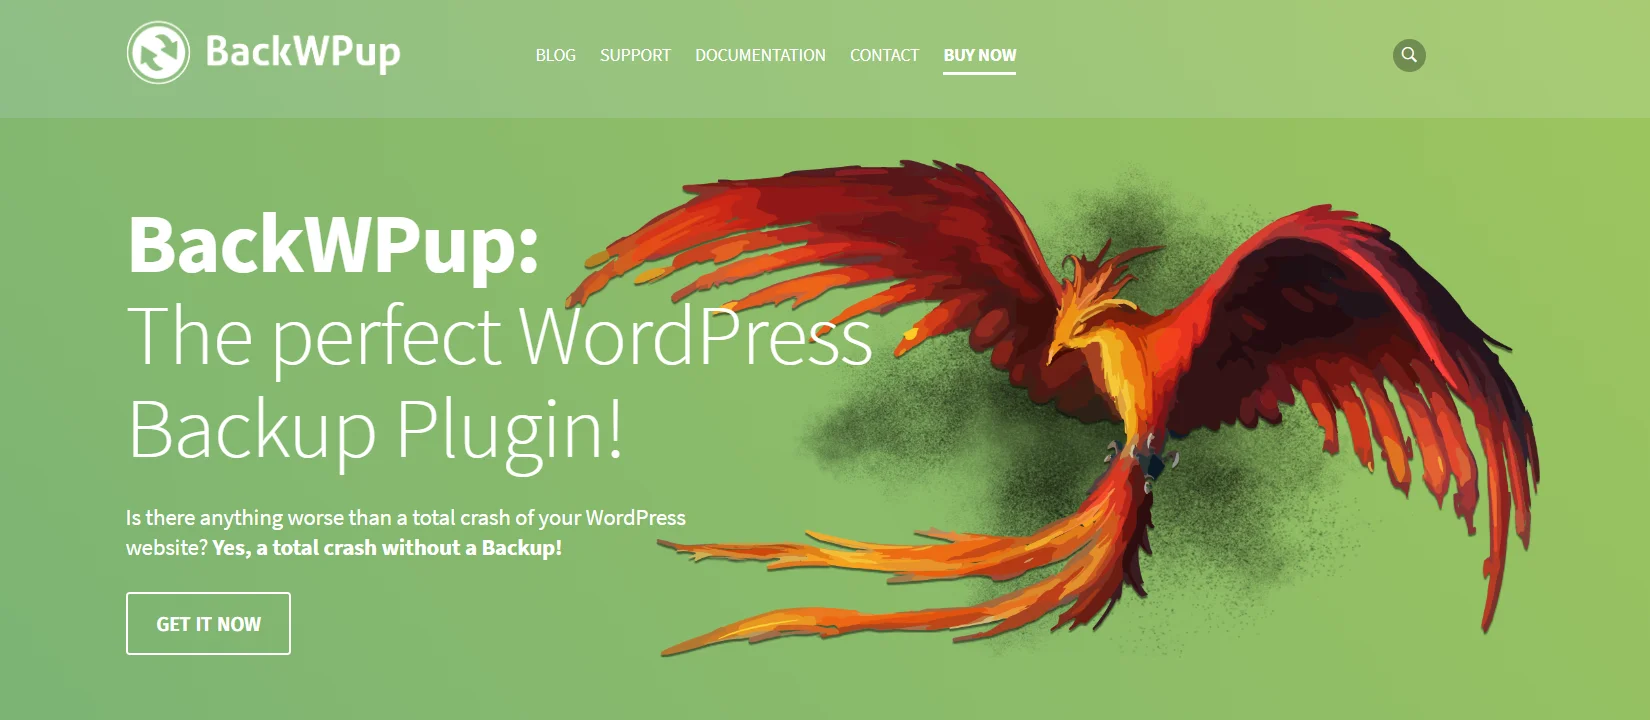 BackWPup Best WordPress Backup 